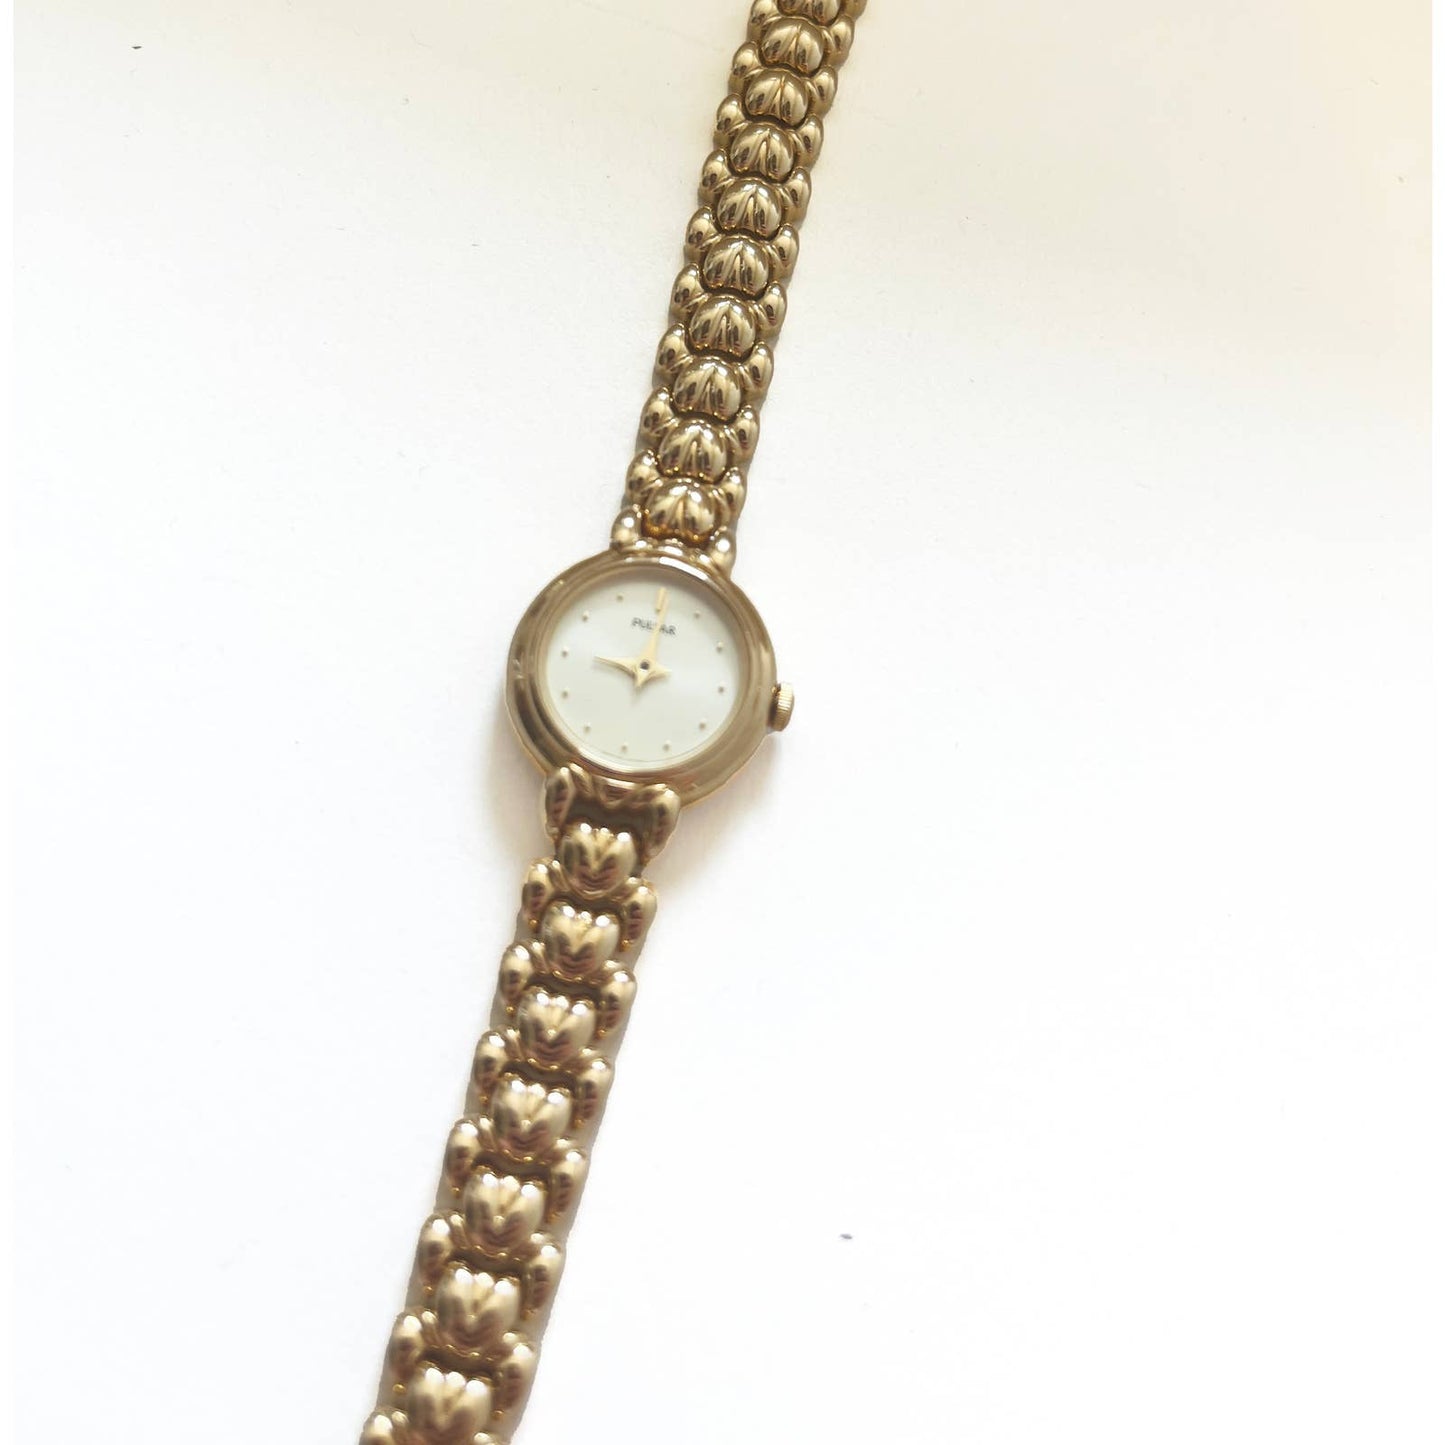 Vintage Gold Chain Link Watch